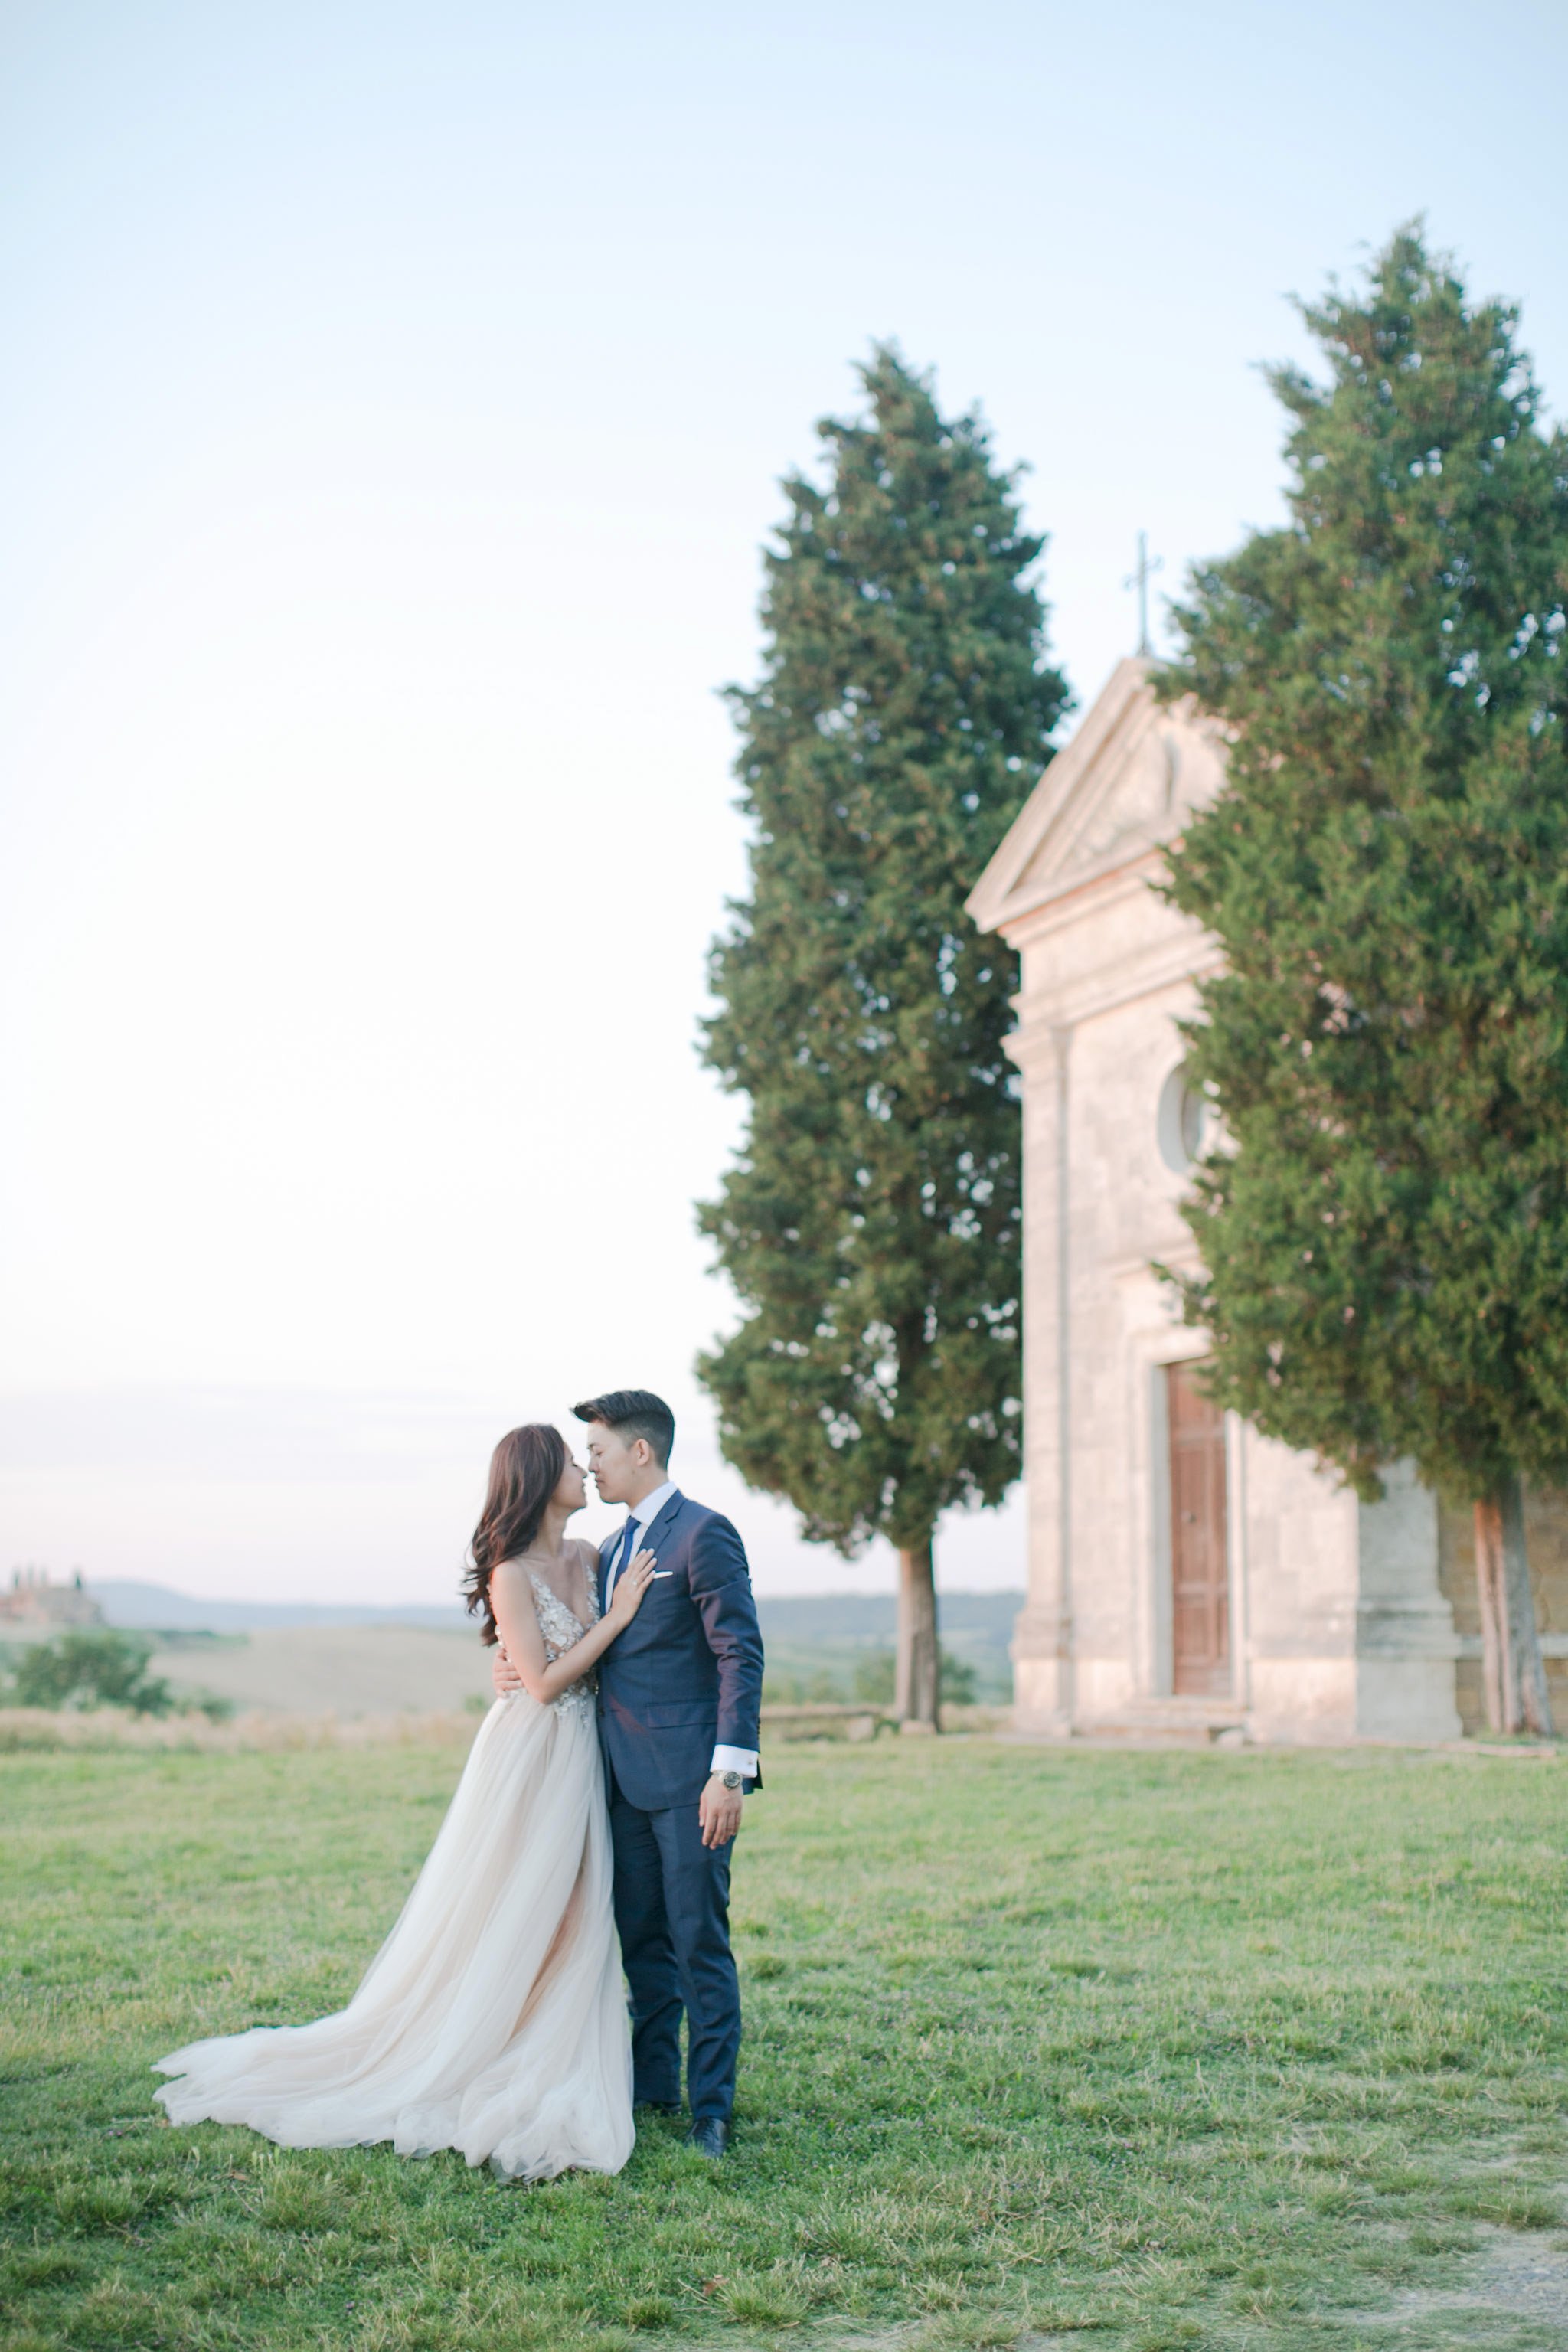 Tuscany-prewedding-villa-cora-16.jpg